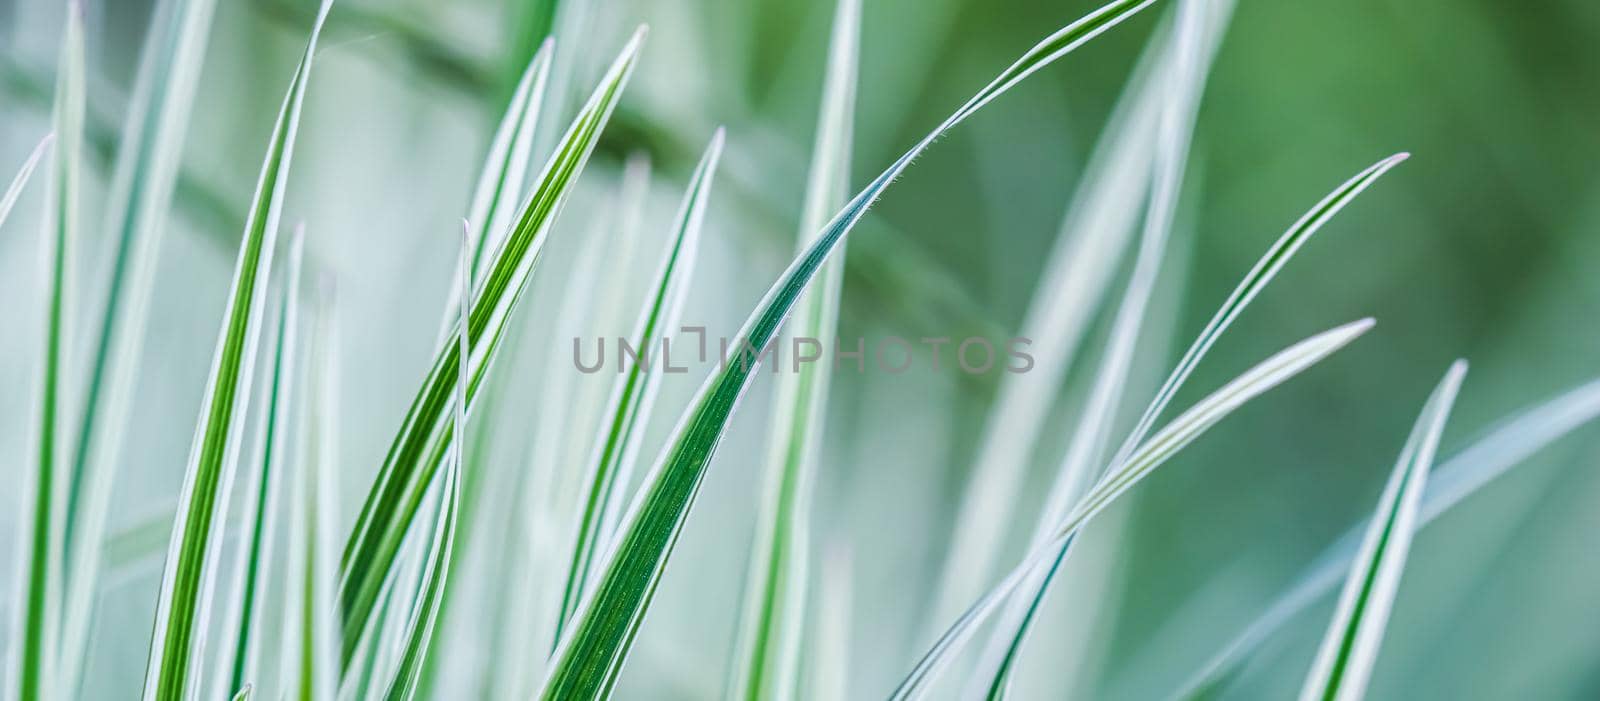 Decorative green and white grass. Arrhenatherum elatius bulbosum variegatum. Natural background. by Olayola